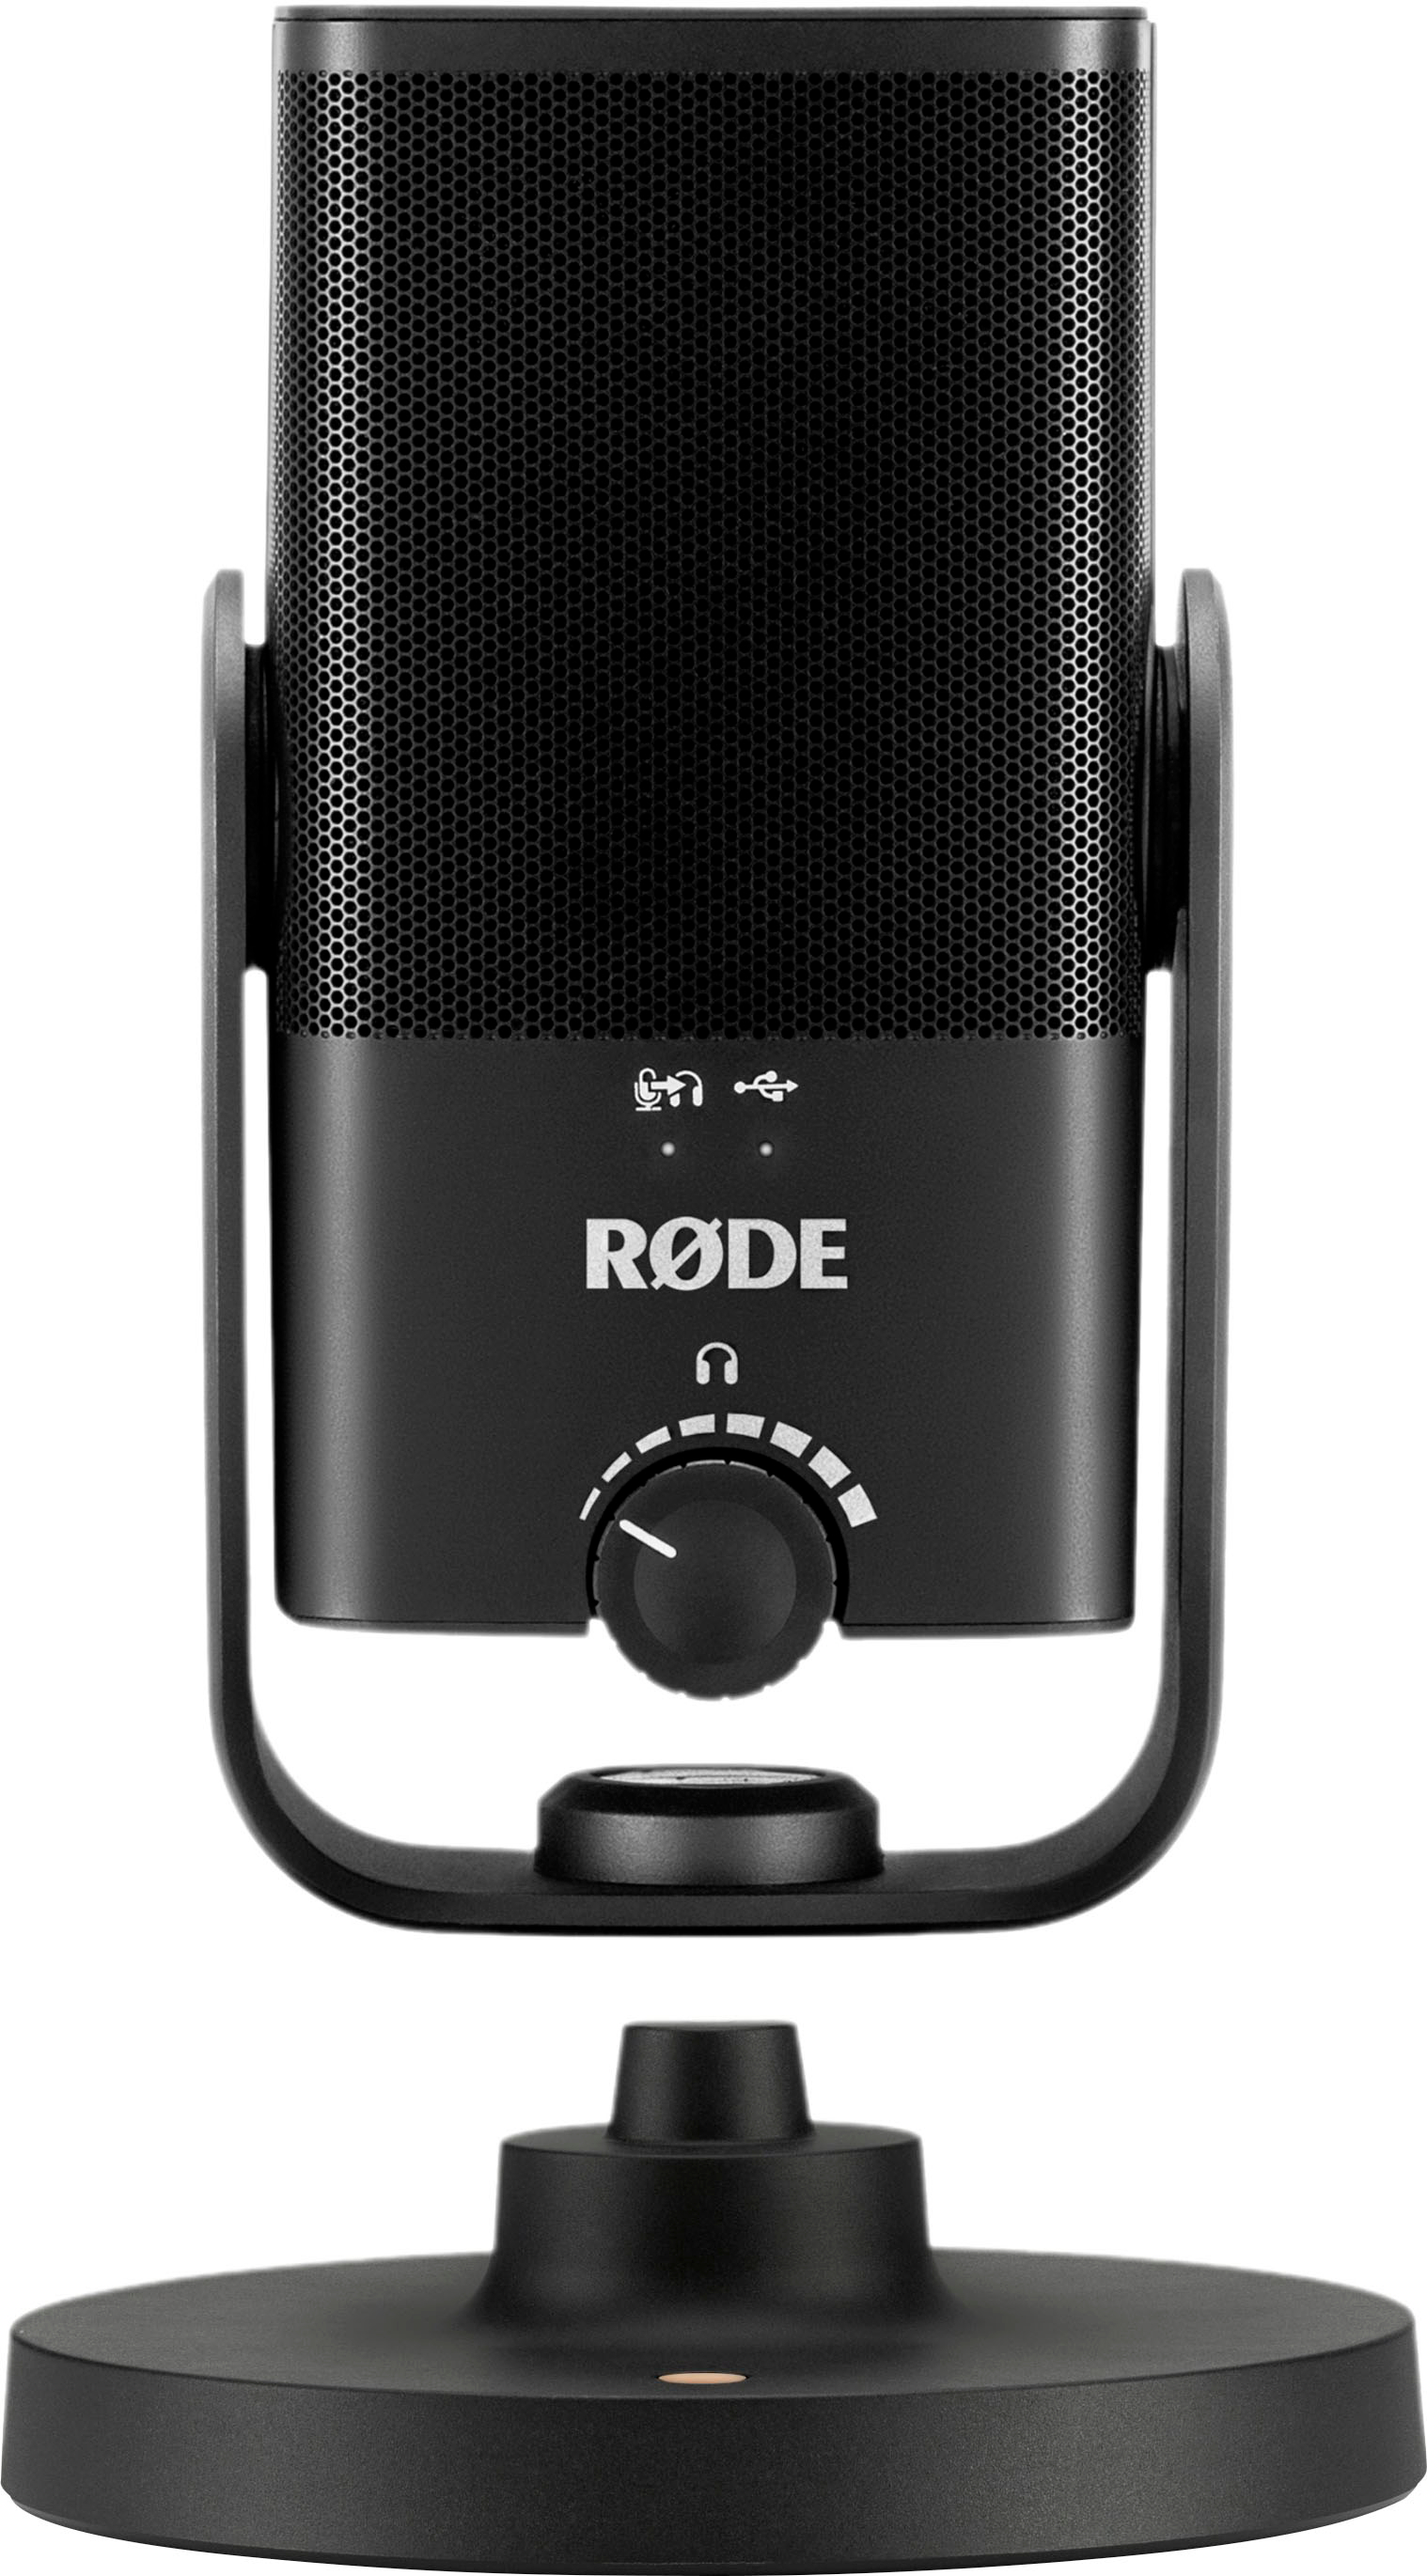 RODE PHOTO R100235 - MICROPHONE NT-USB NOIR